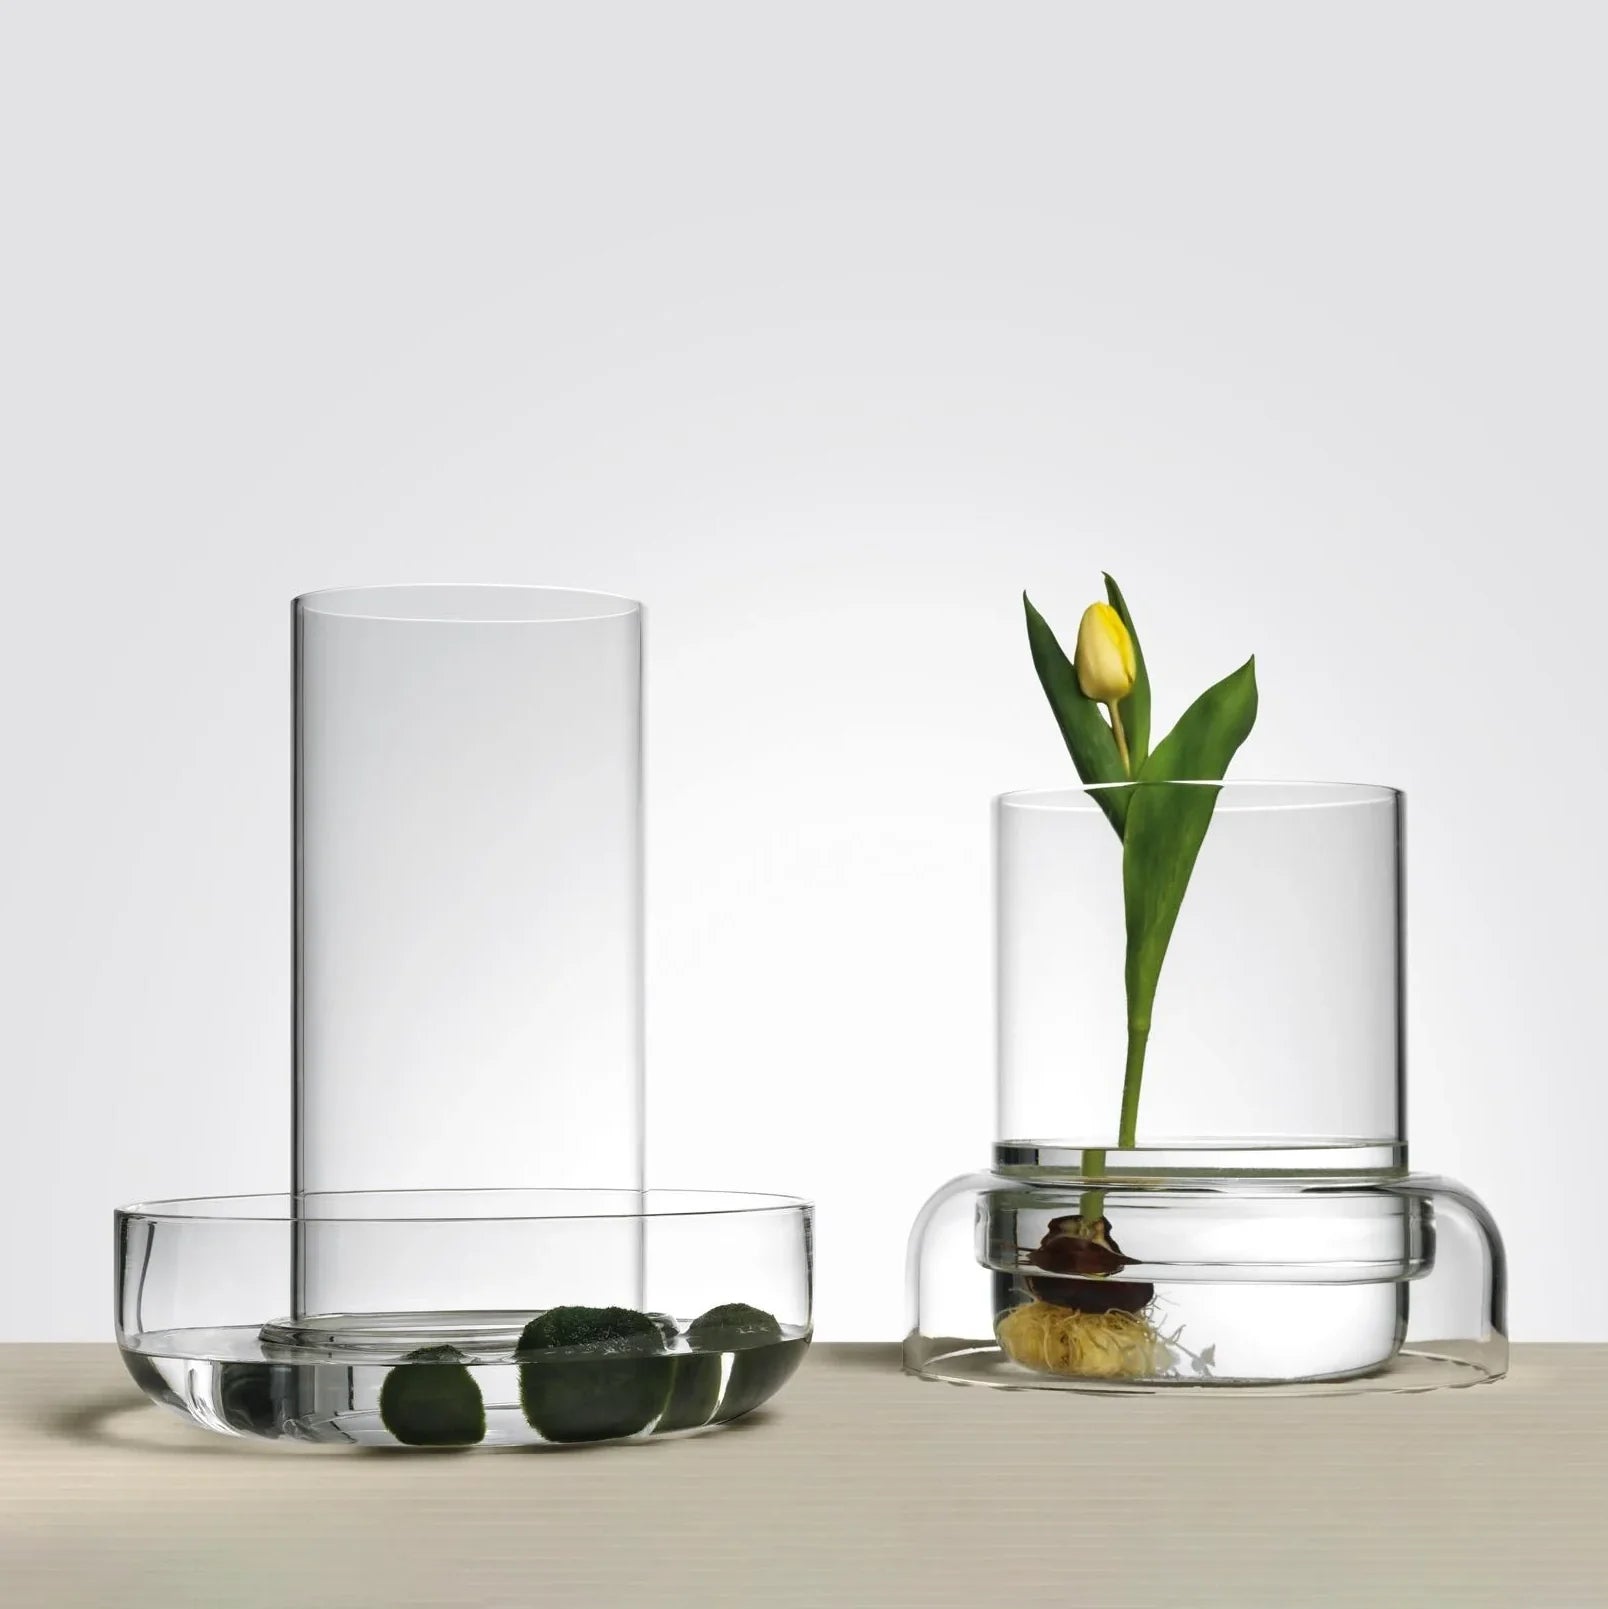 Metaverso, high dimensions modular vase